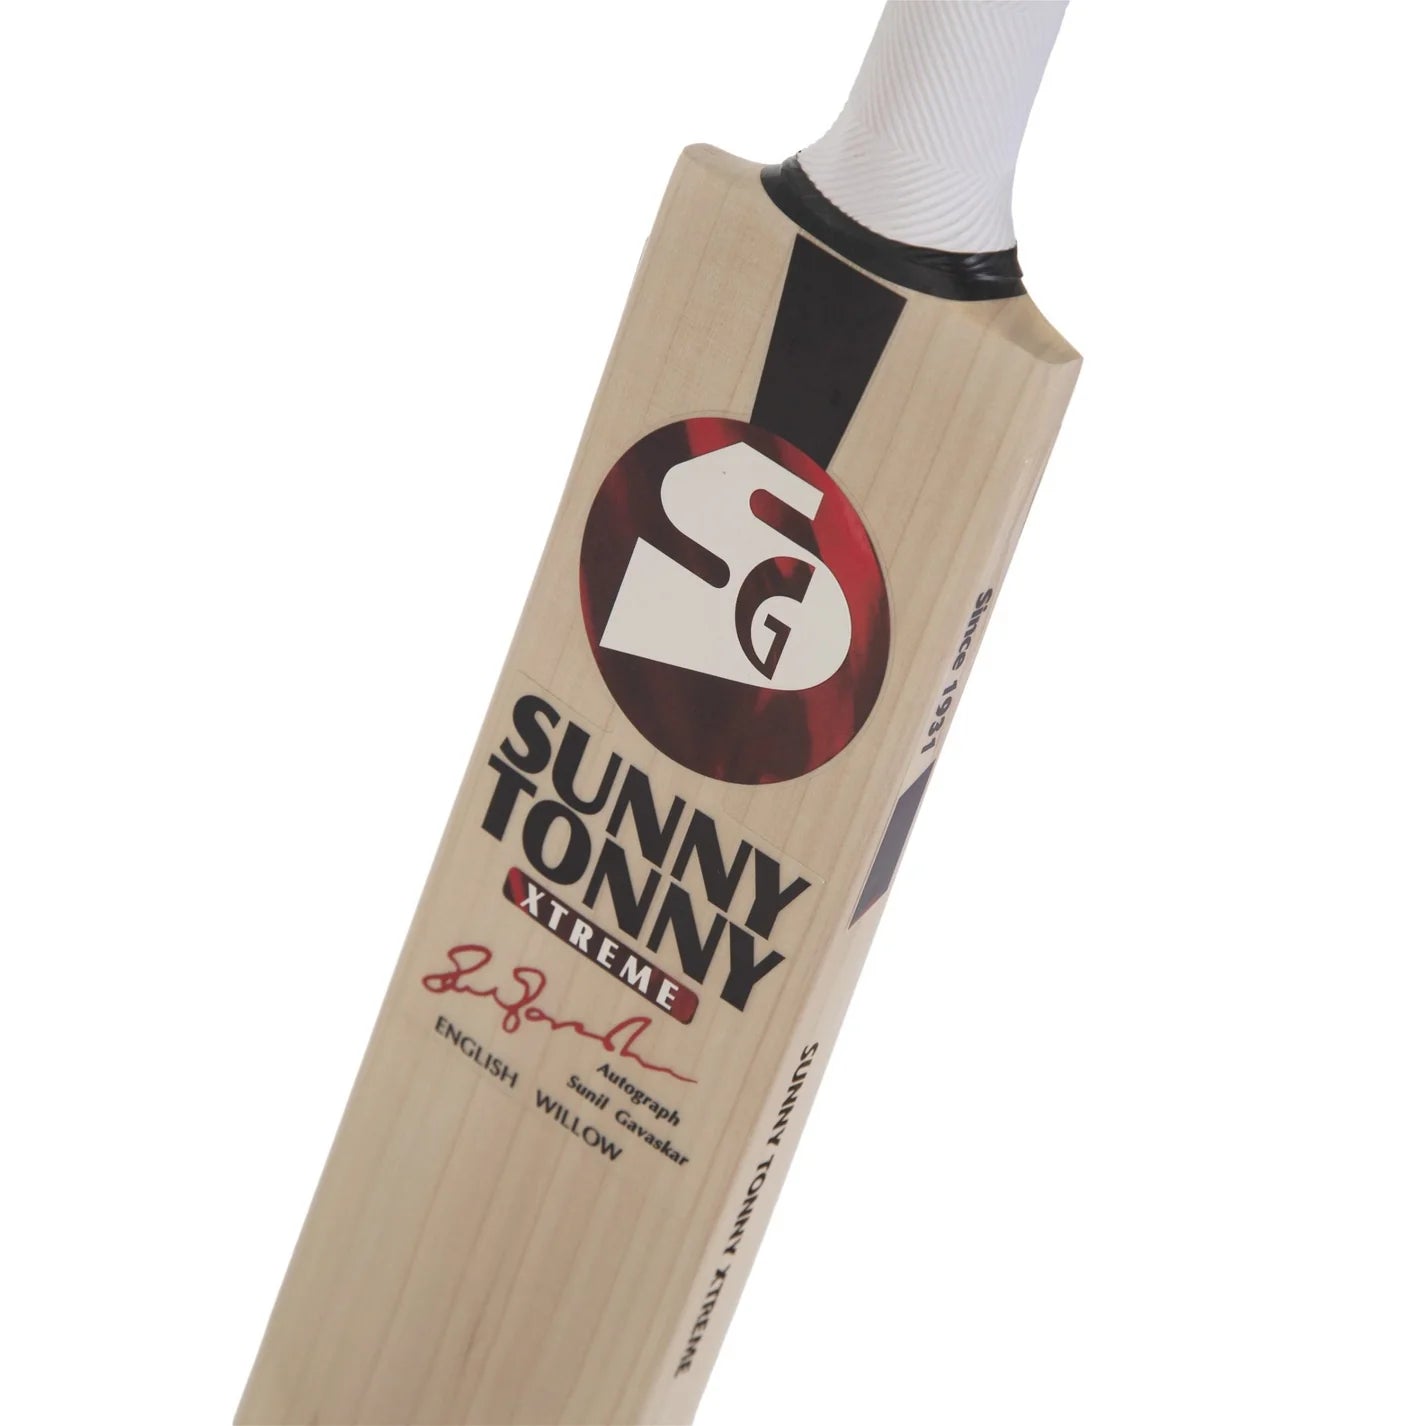 SG Sunny Tonny Xtreme - Grade 2 Worlds Finest English Willow Cricket Bat